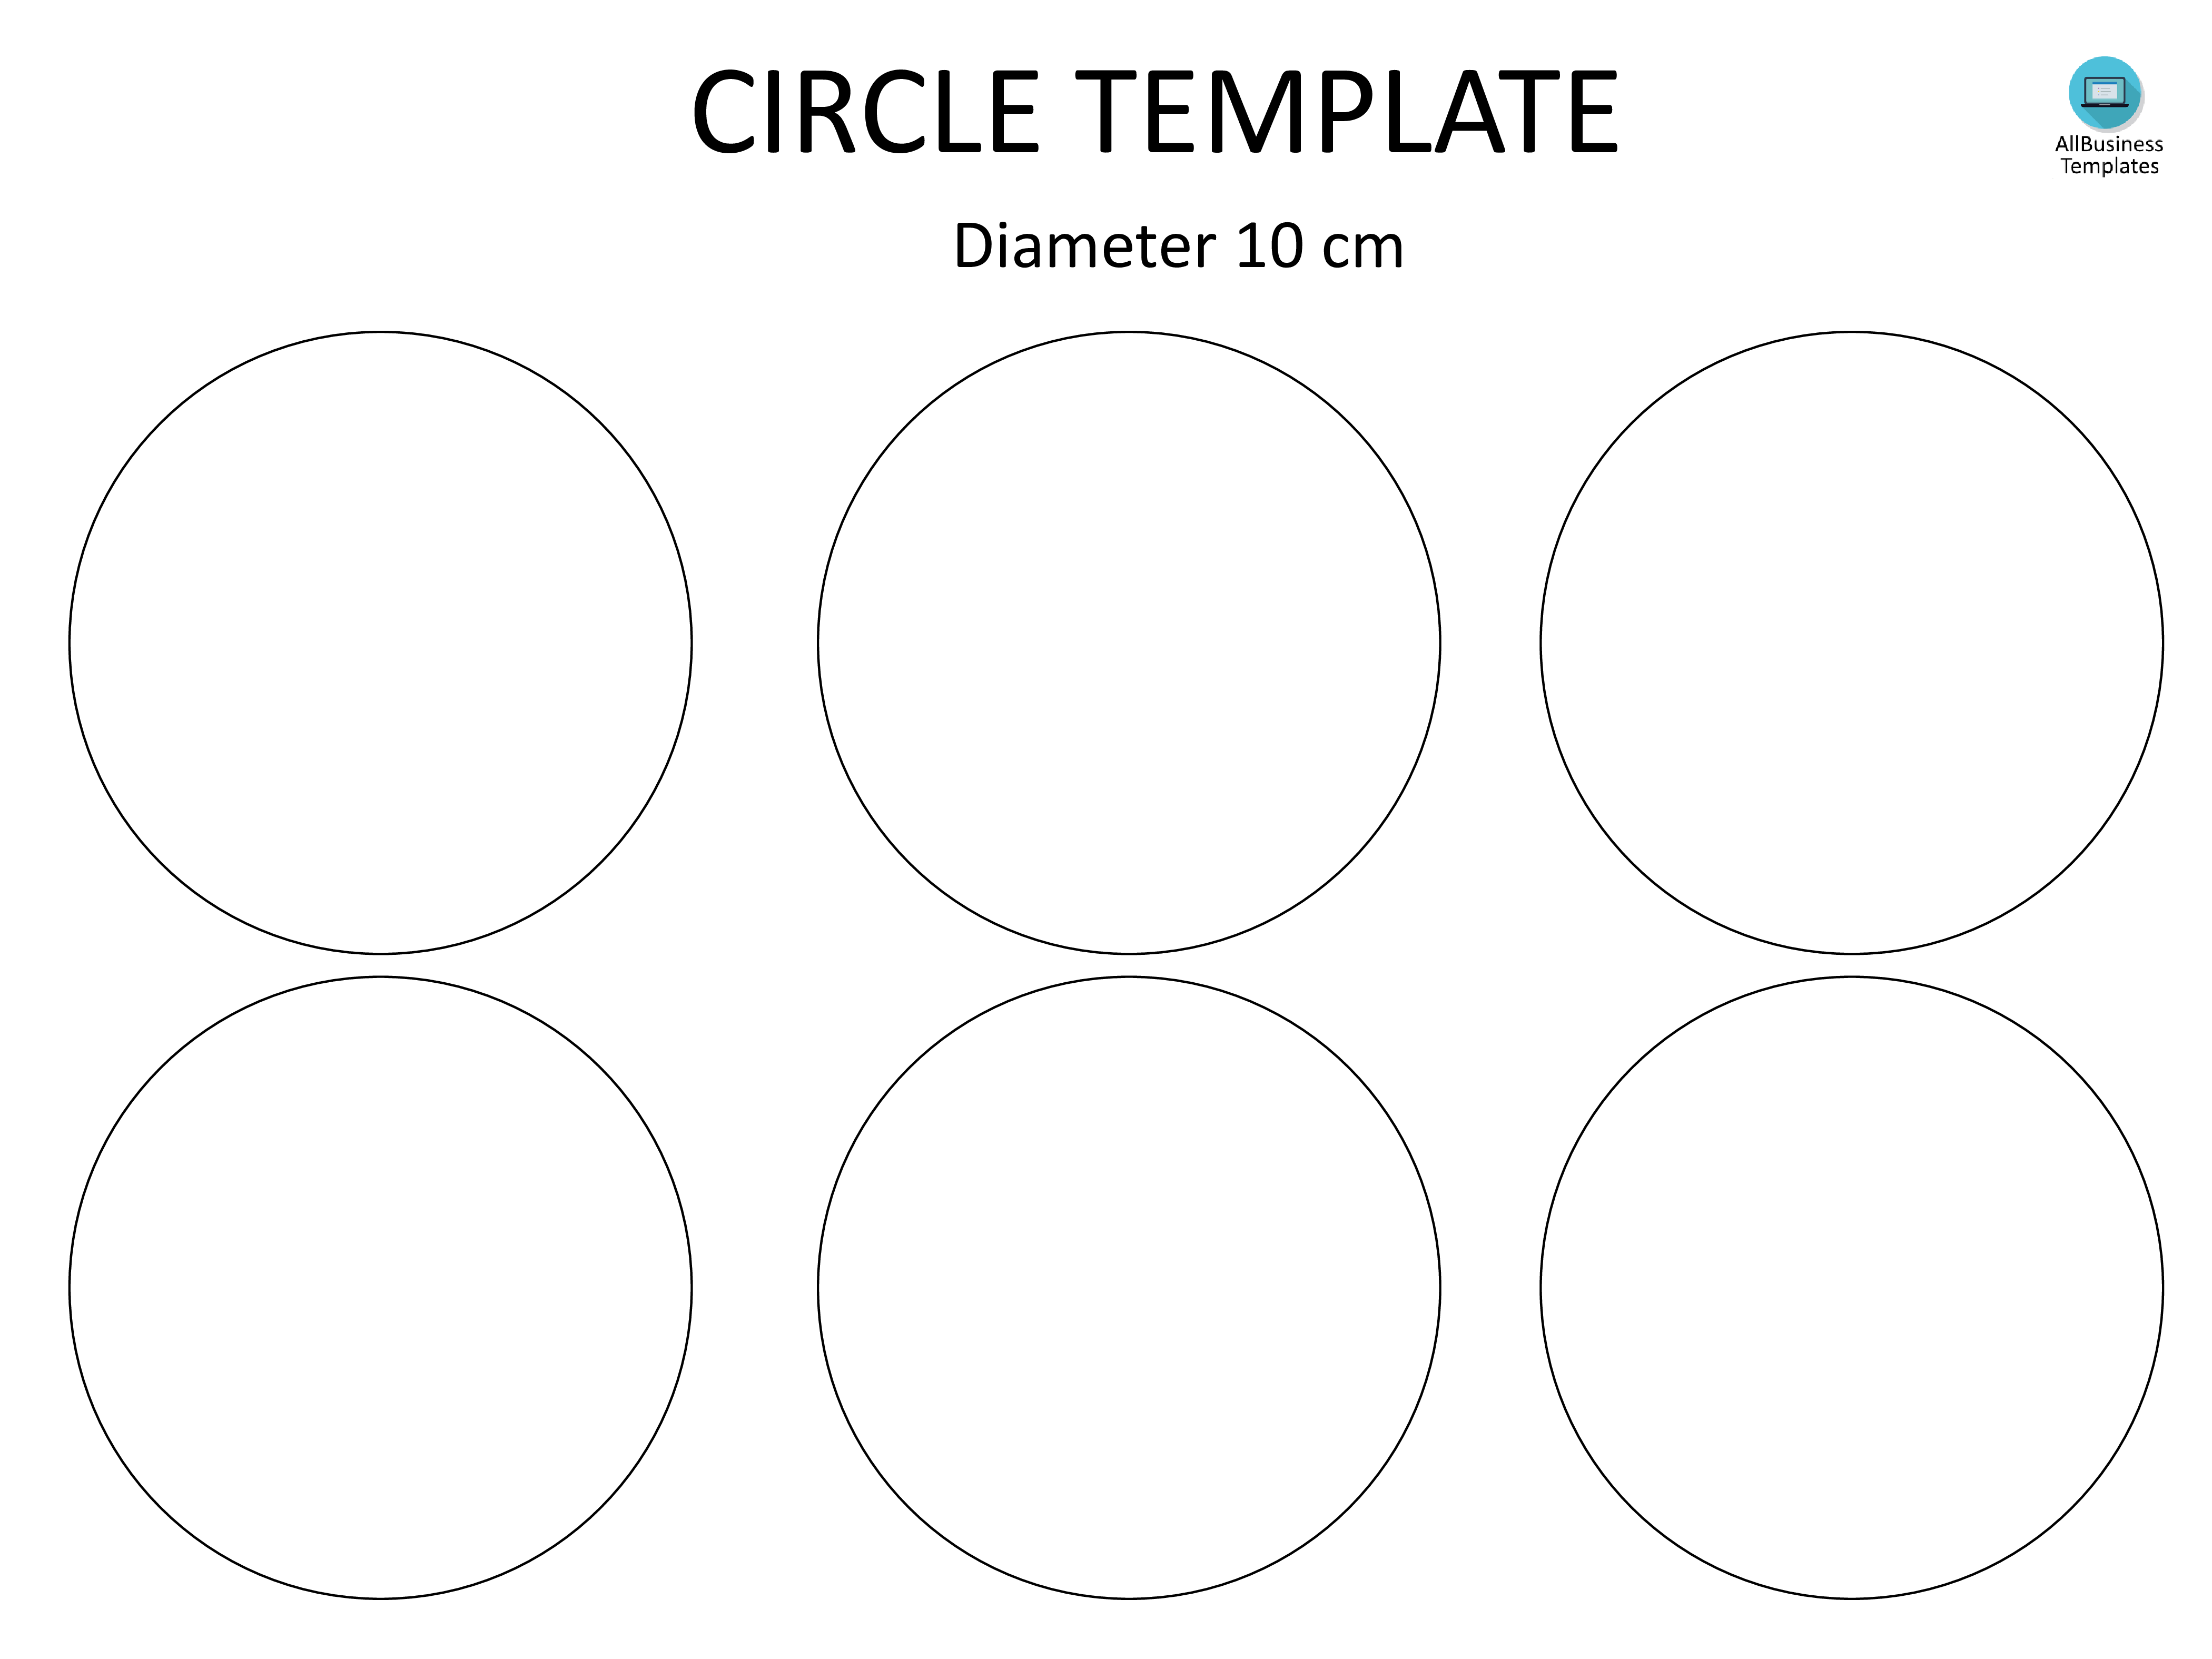 Circle template with 10cm diameter main image